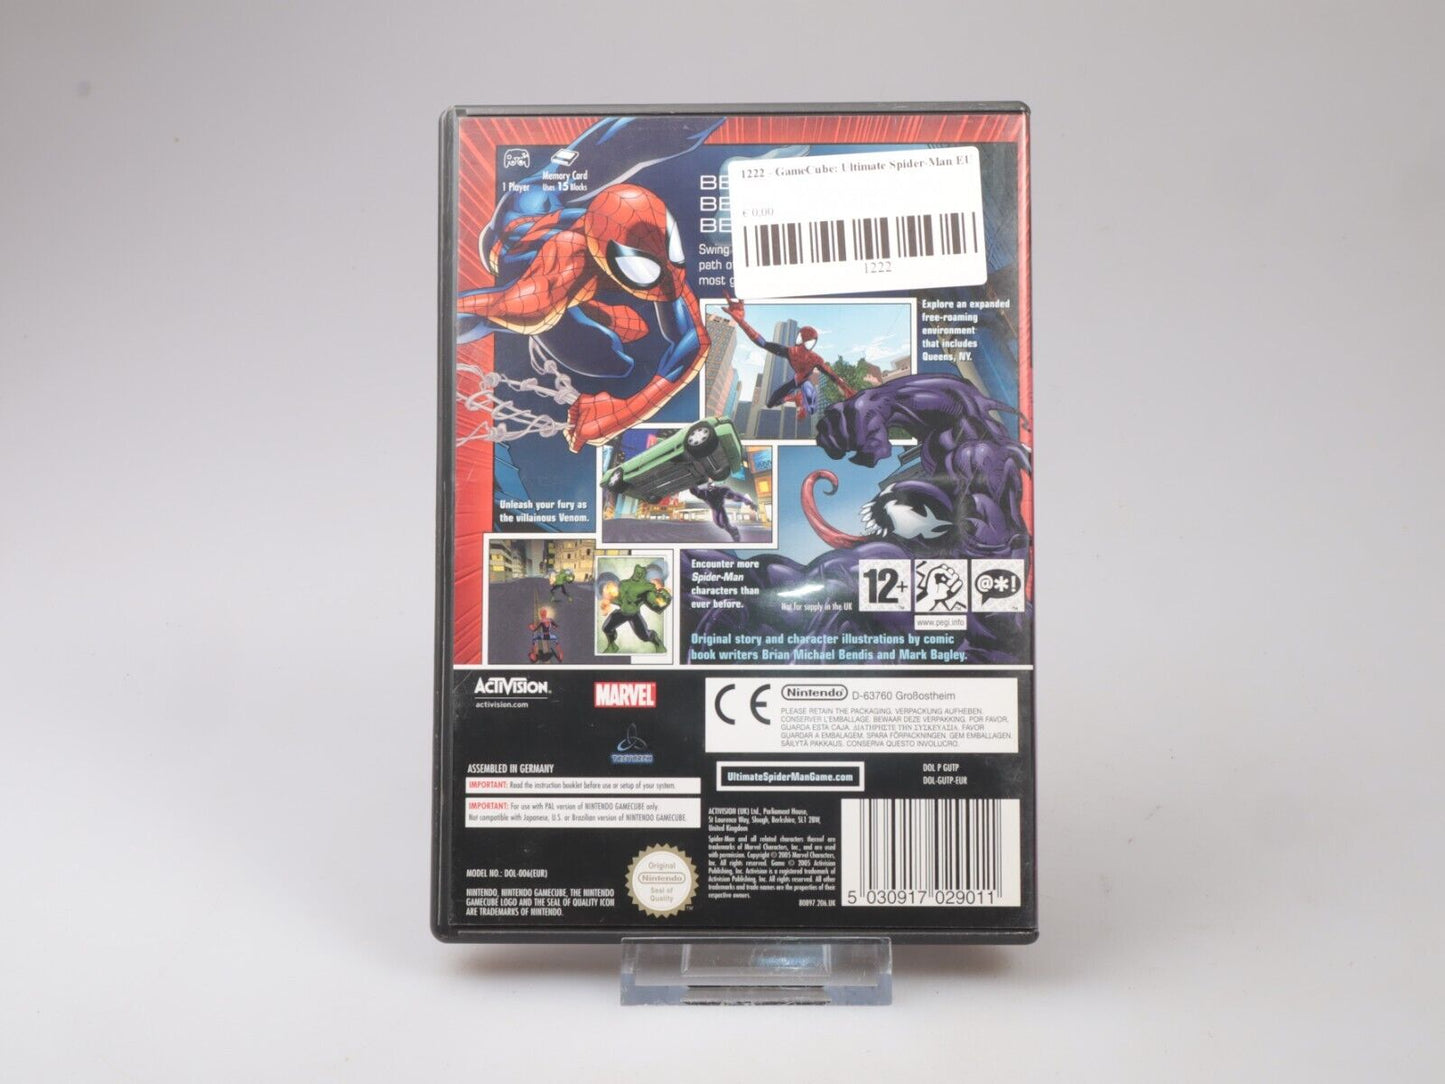 GameCube | Ultieme Spider-Man (EUR) (PAL) 